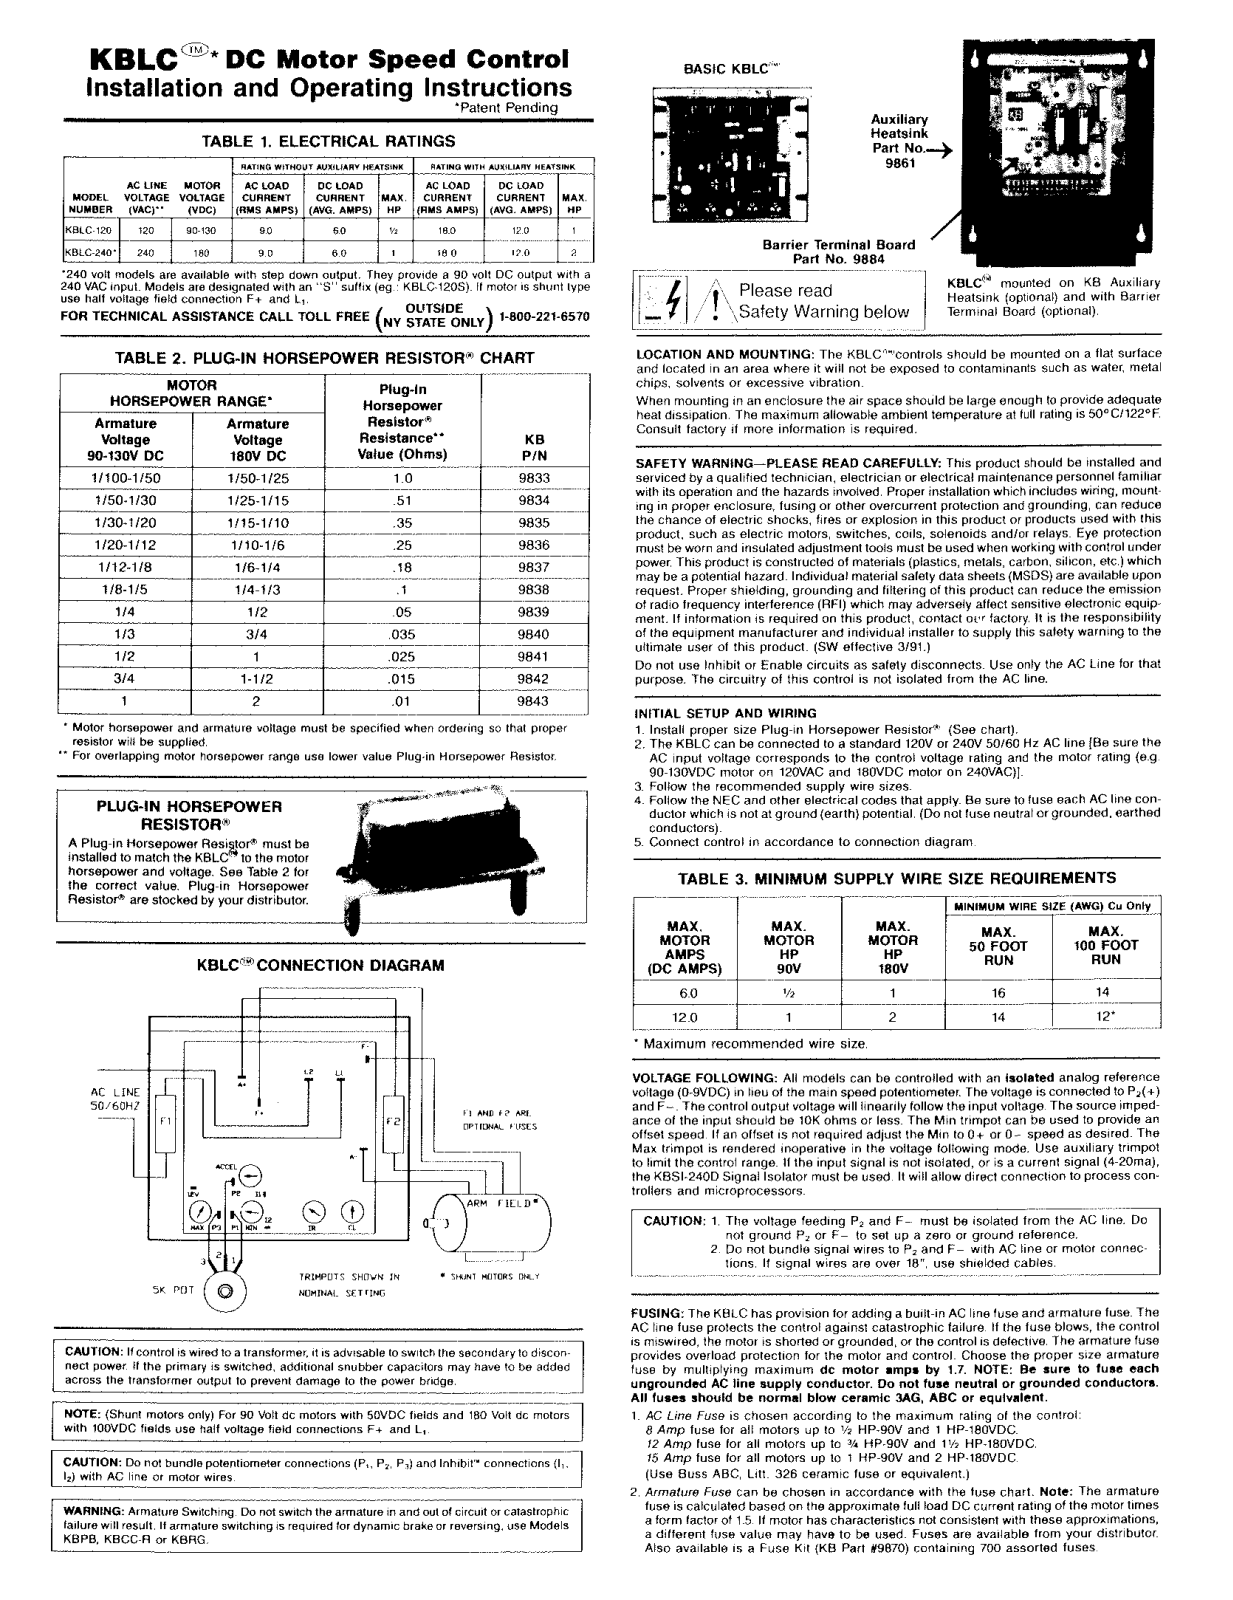 Kb electronics KBLC-240, KBLC-120 Manual